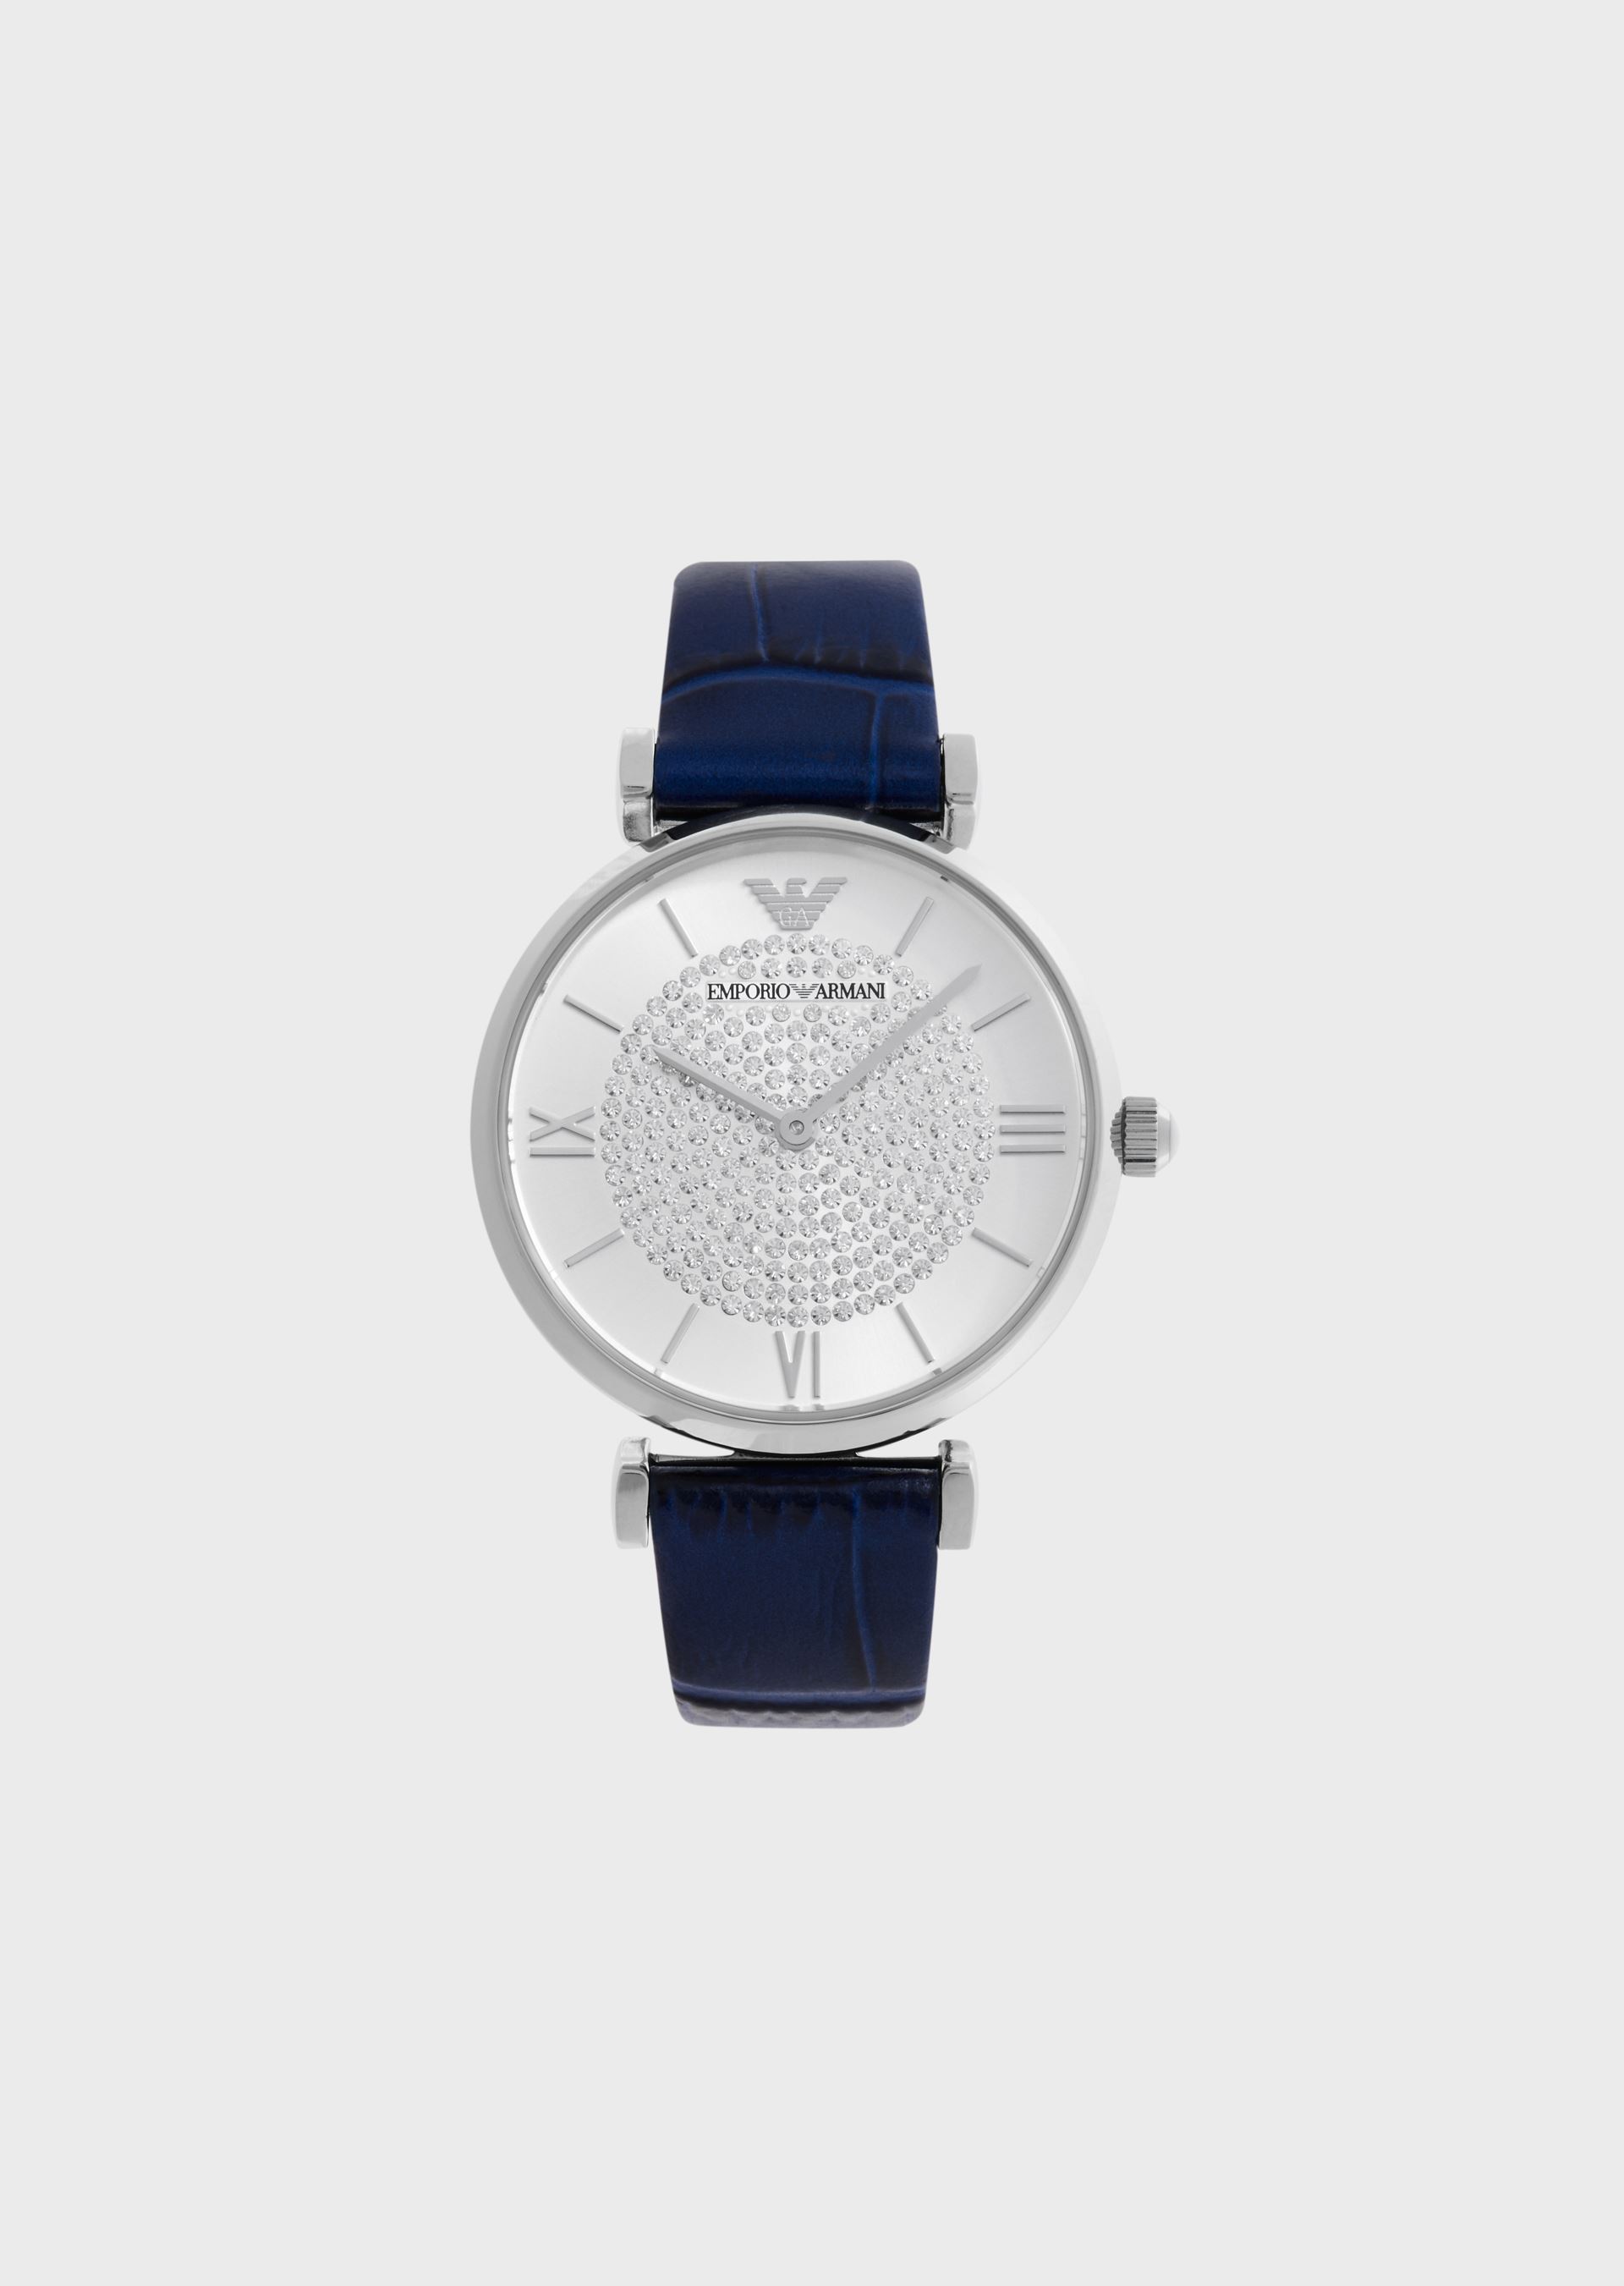 Emporio Armani Leather Strap Watches - Item 50252954